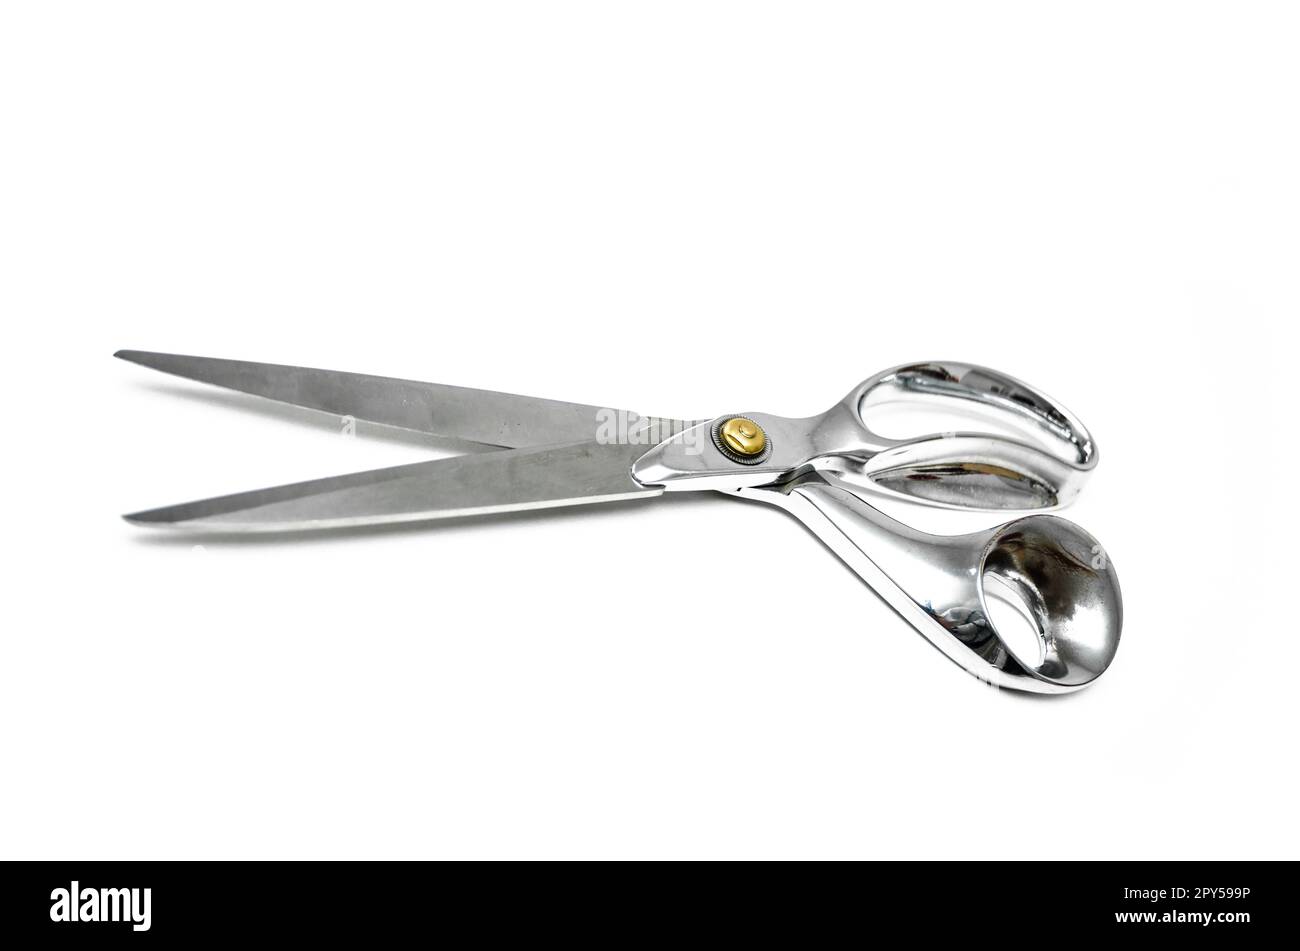 What Is The Hook On Hair Scissor Handles? Hook, Tang & Finger